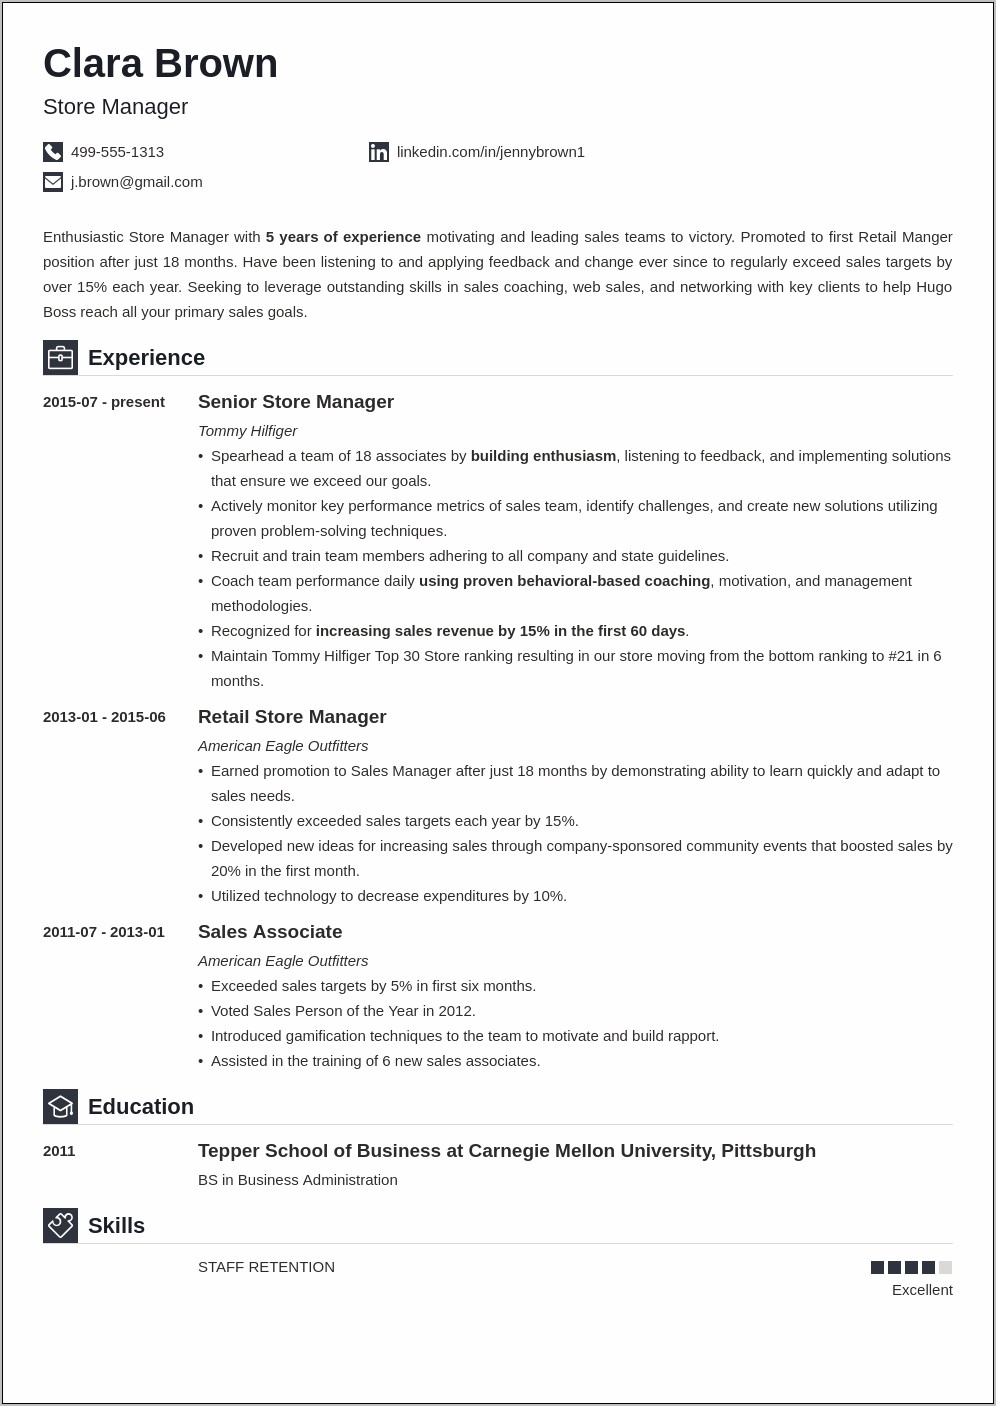 Store Manager Description For Resume